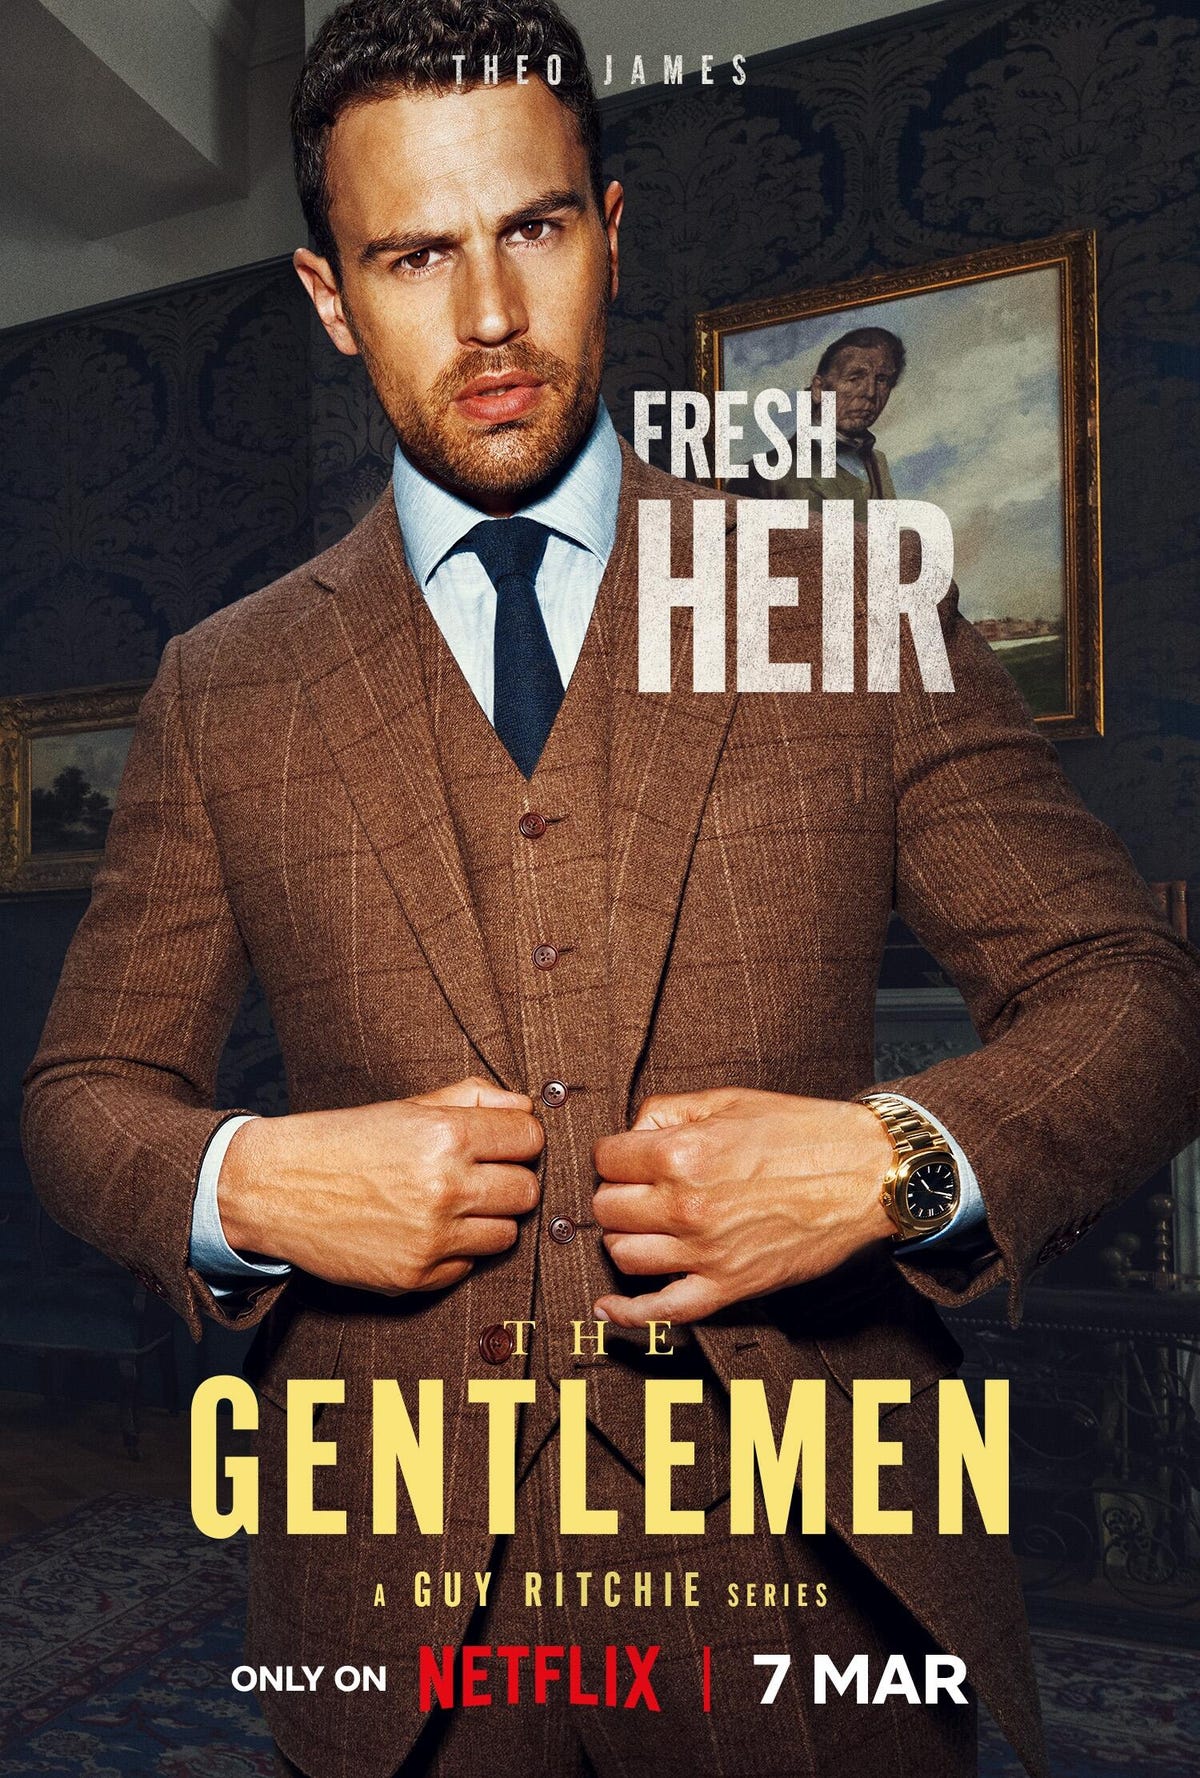 theo james wears a suit for the gentlemen on Netflix